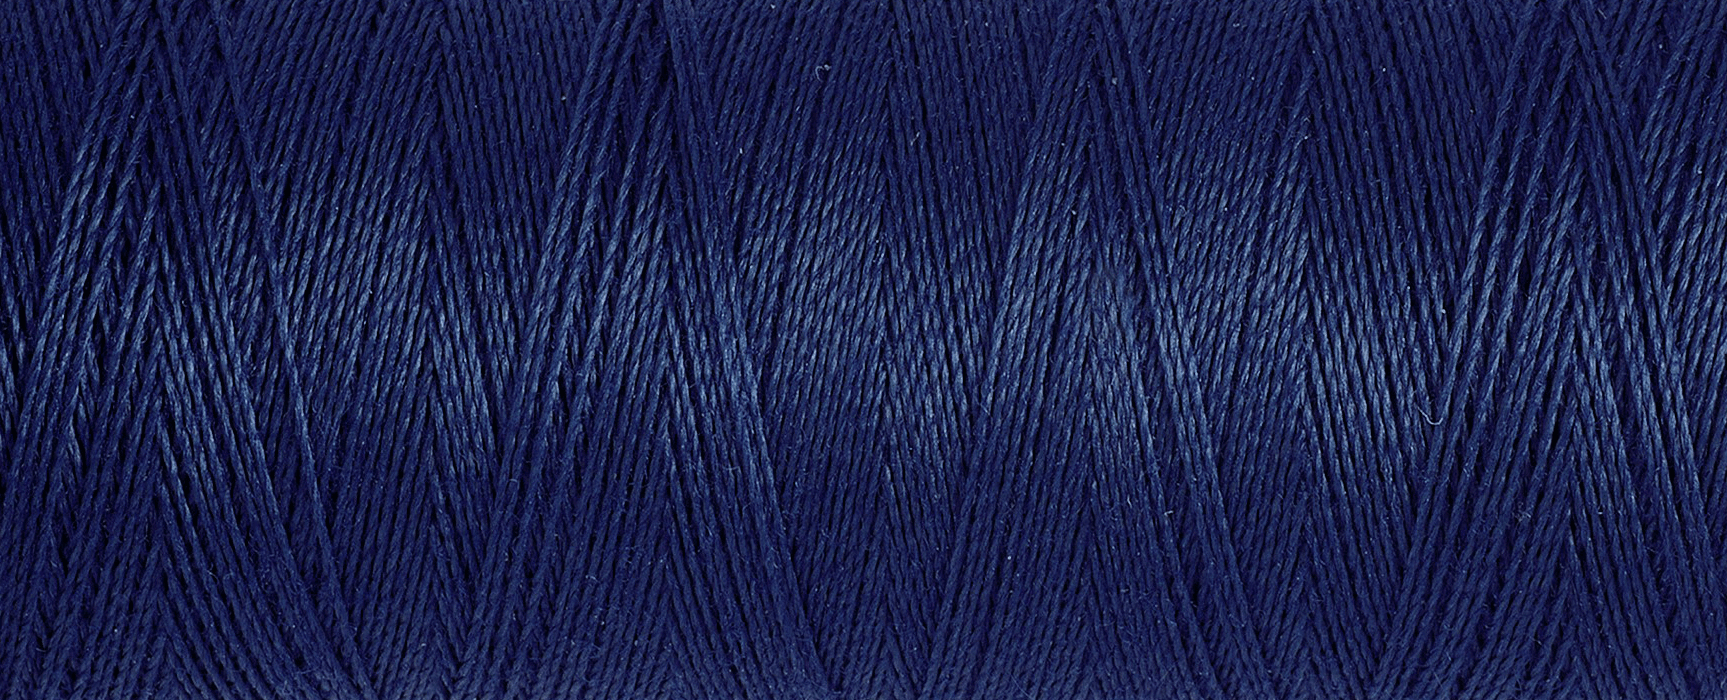 Gutermann Sew-All Thread - 100M (13)-Thread-Jelly Fabrics